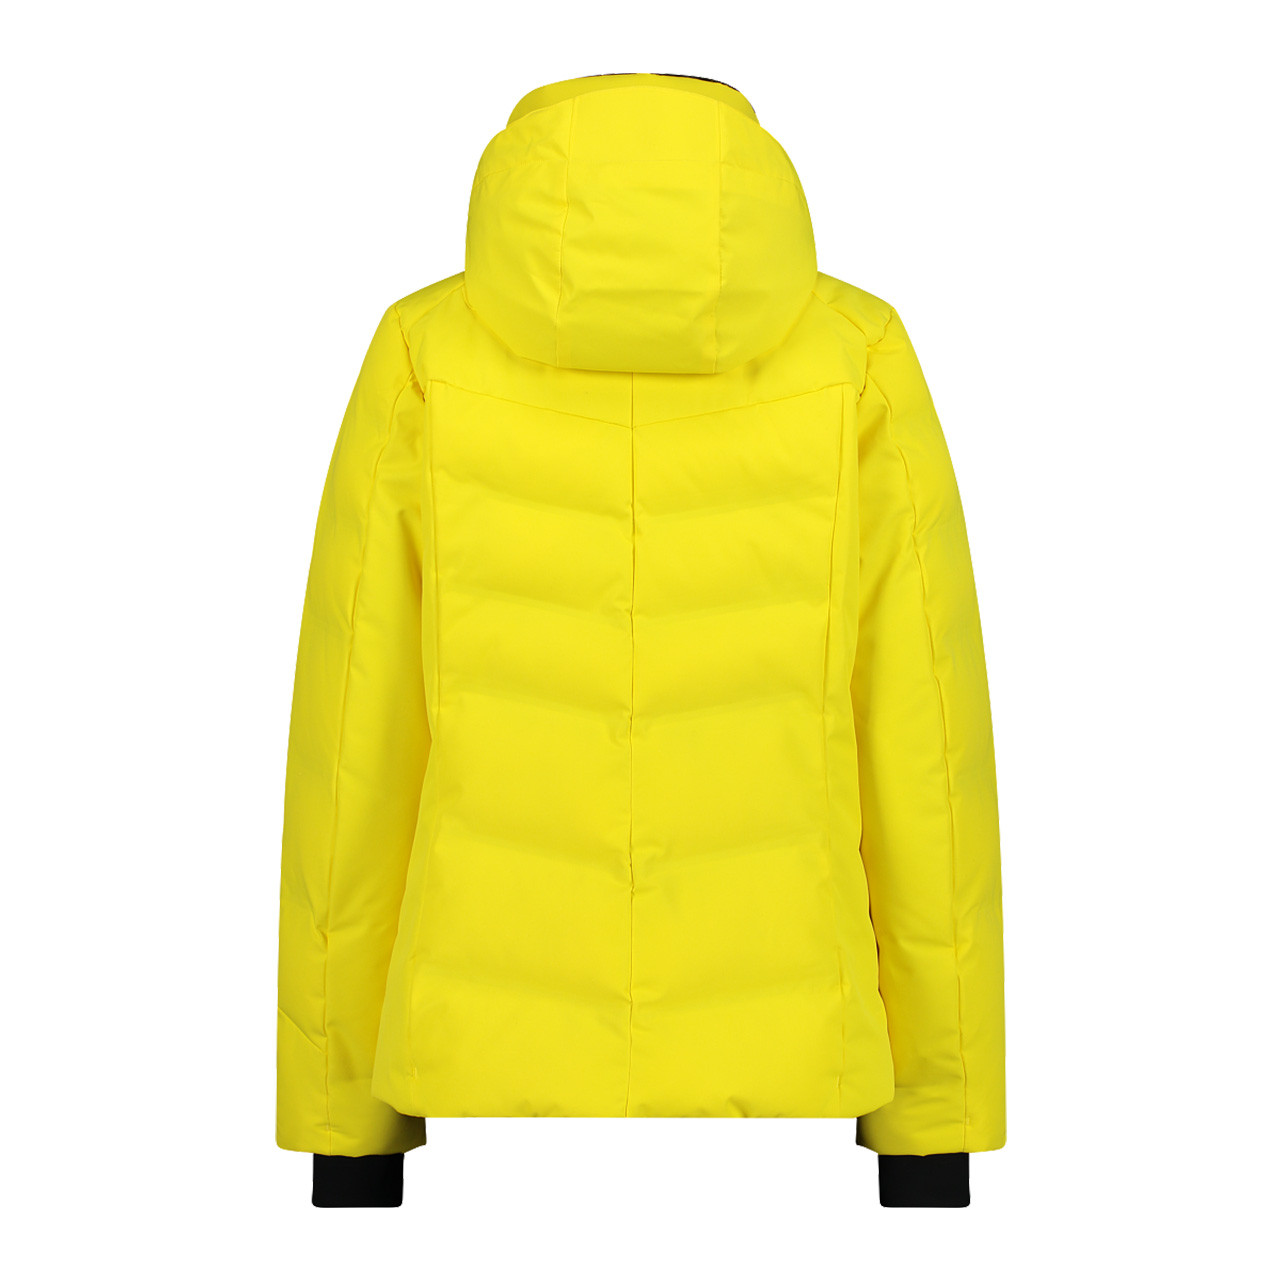 CMP Damen Outdoor Skijacke yellow |XSPO